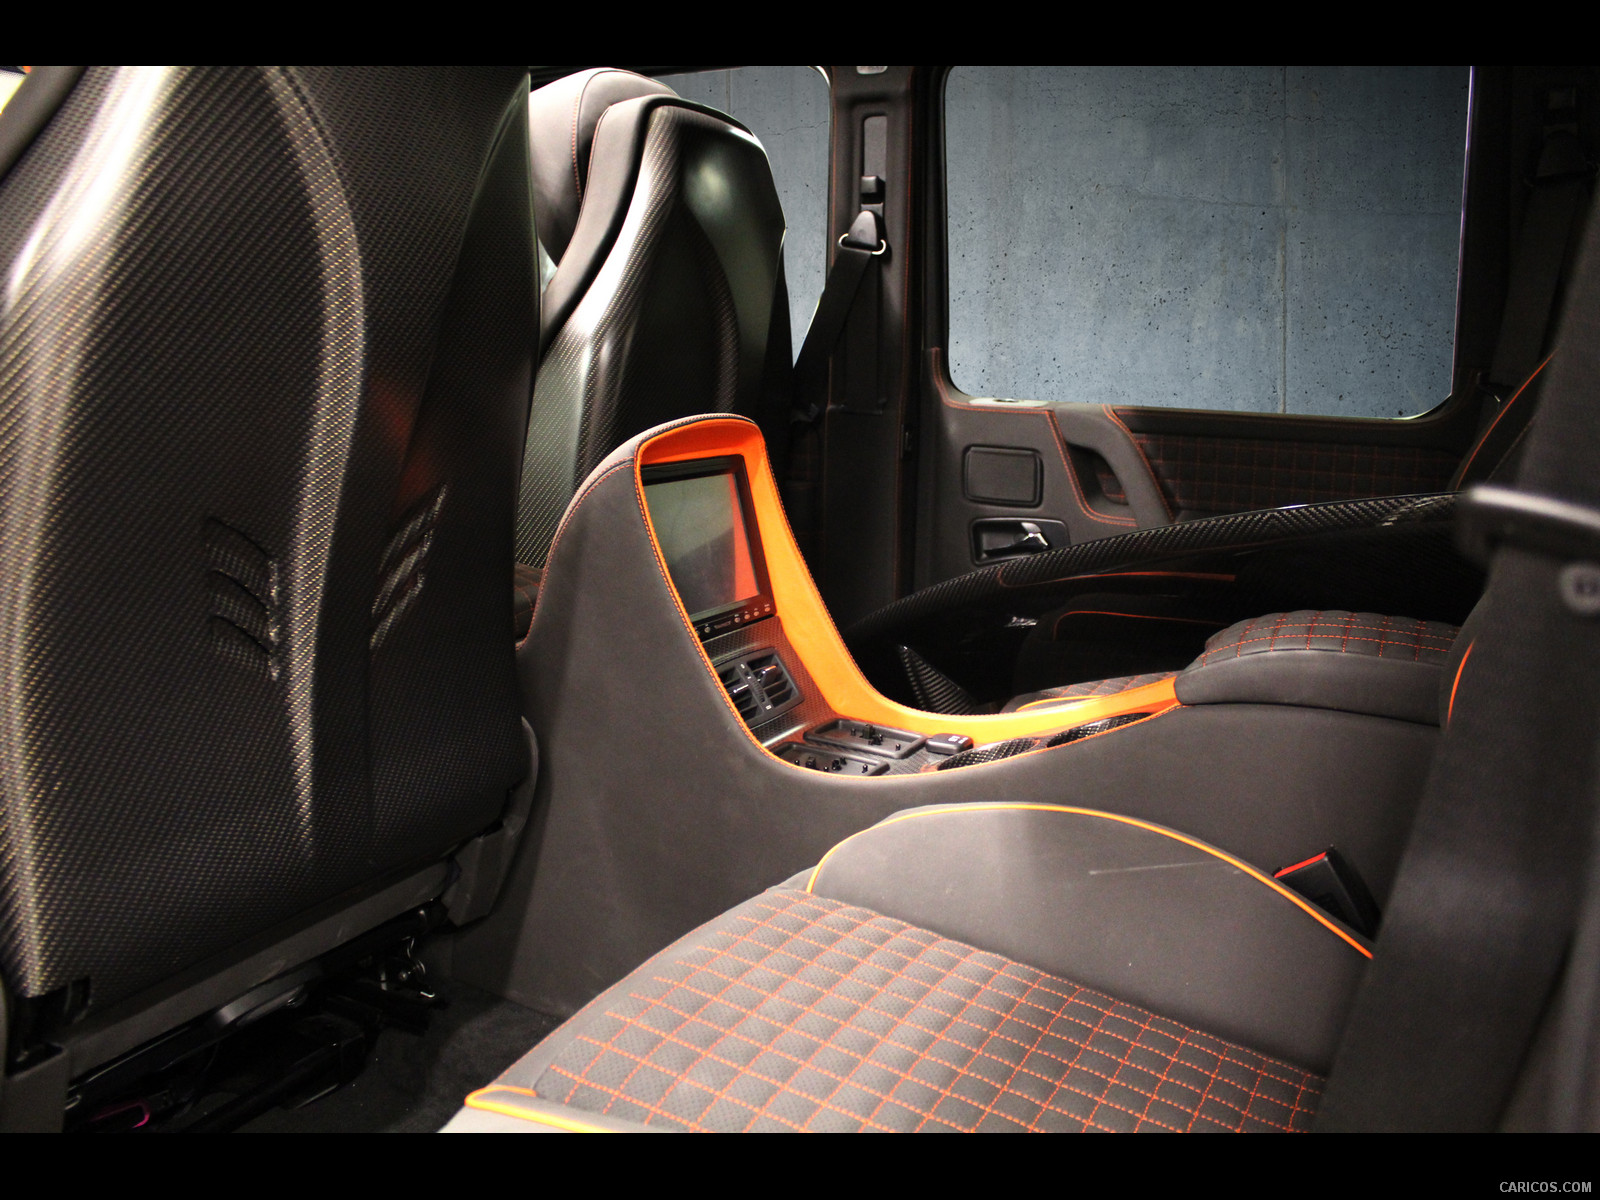 11 Mansory Mercedes Benz G Class Interior Rear Seats Caricos